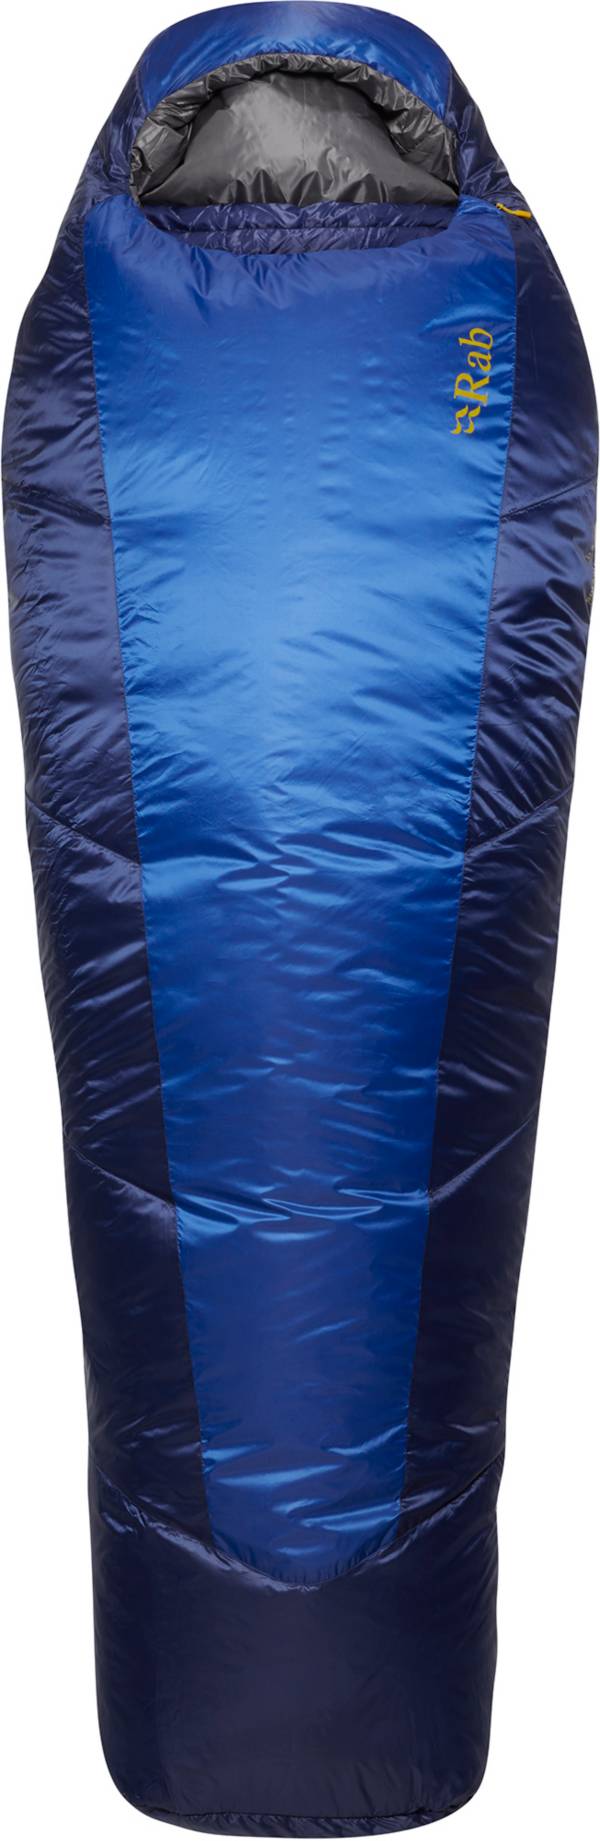 Rab Solar Eco 4 Sleeping Bag 10°F product image